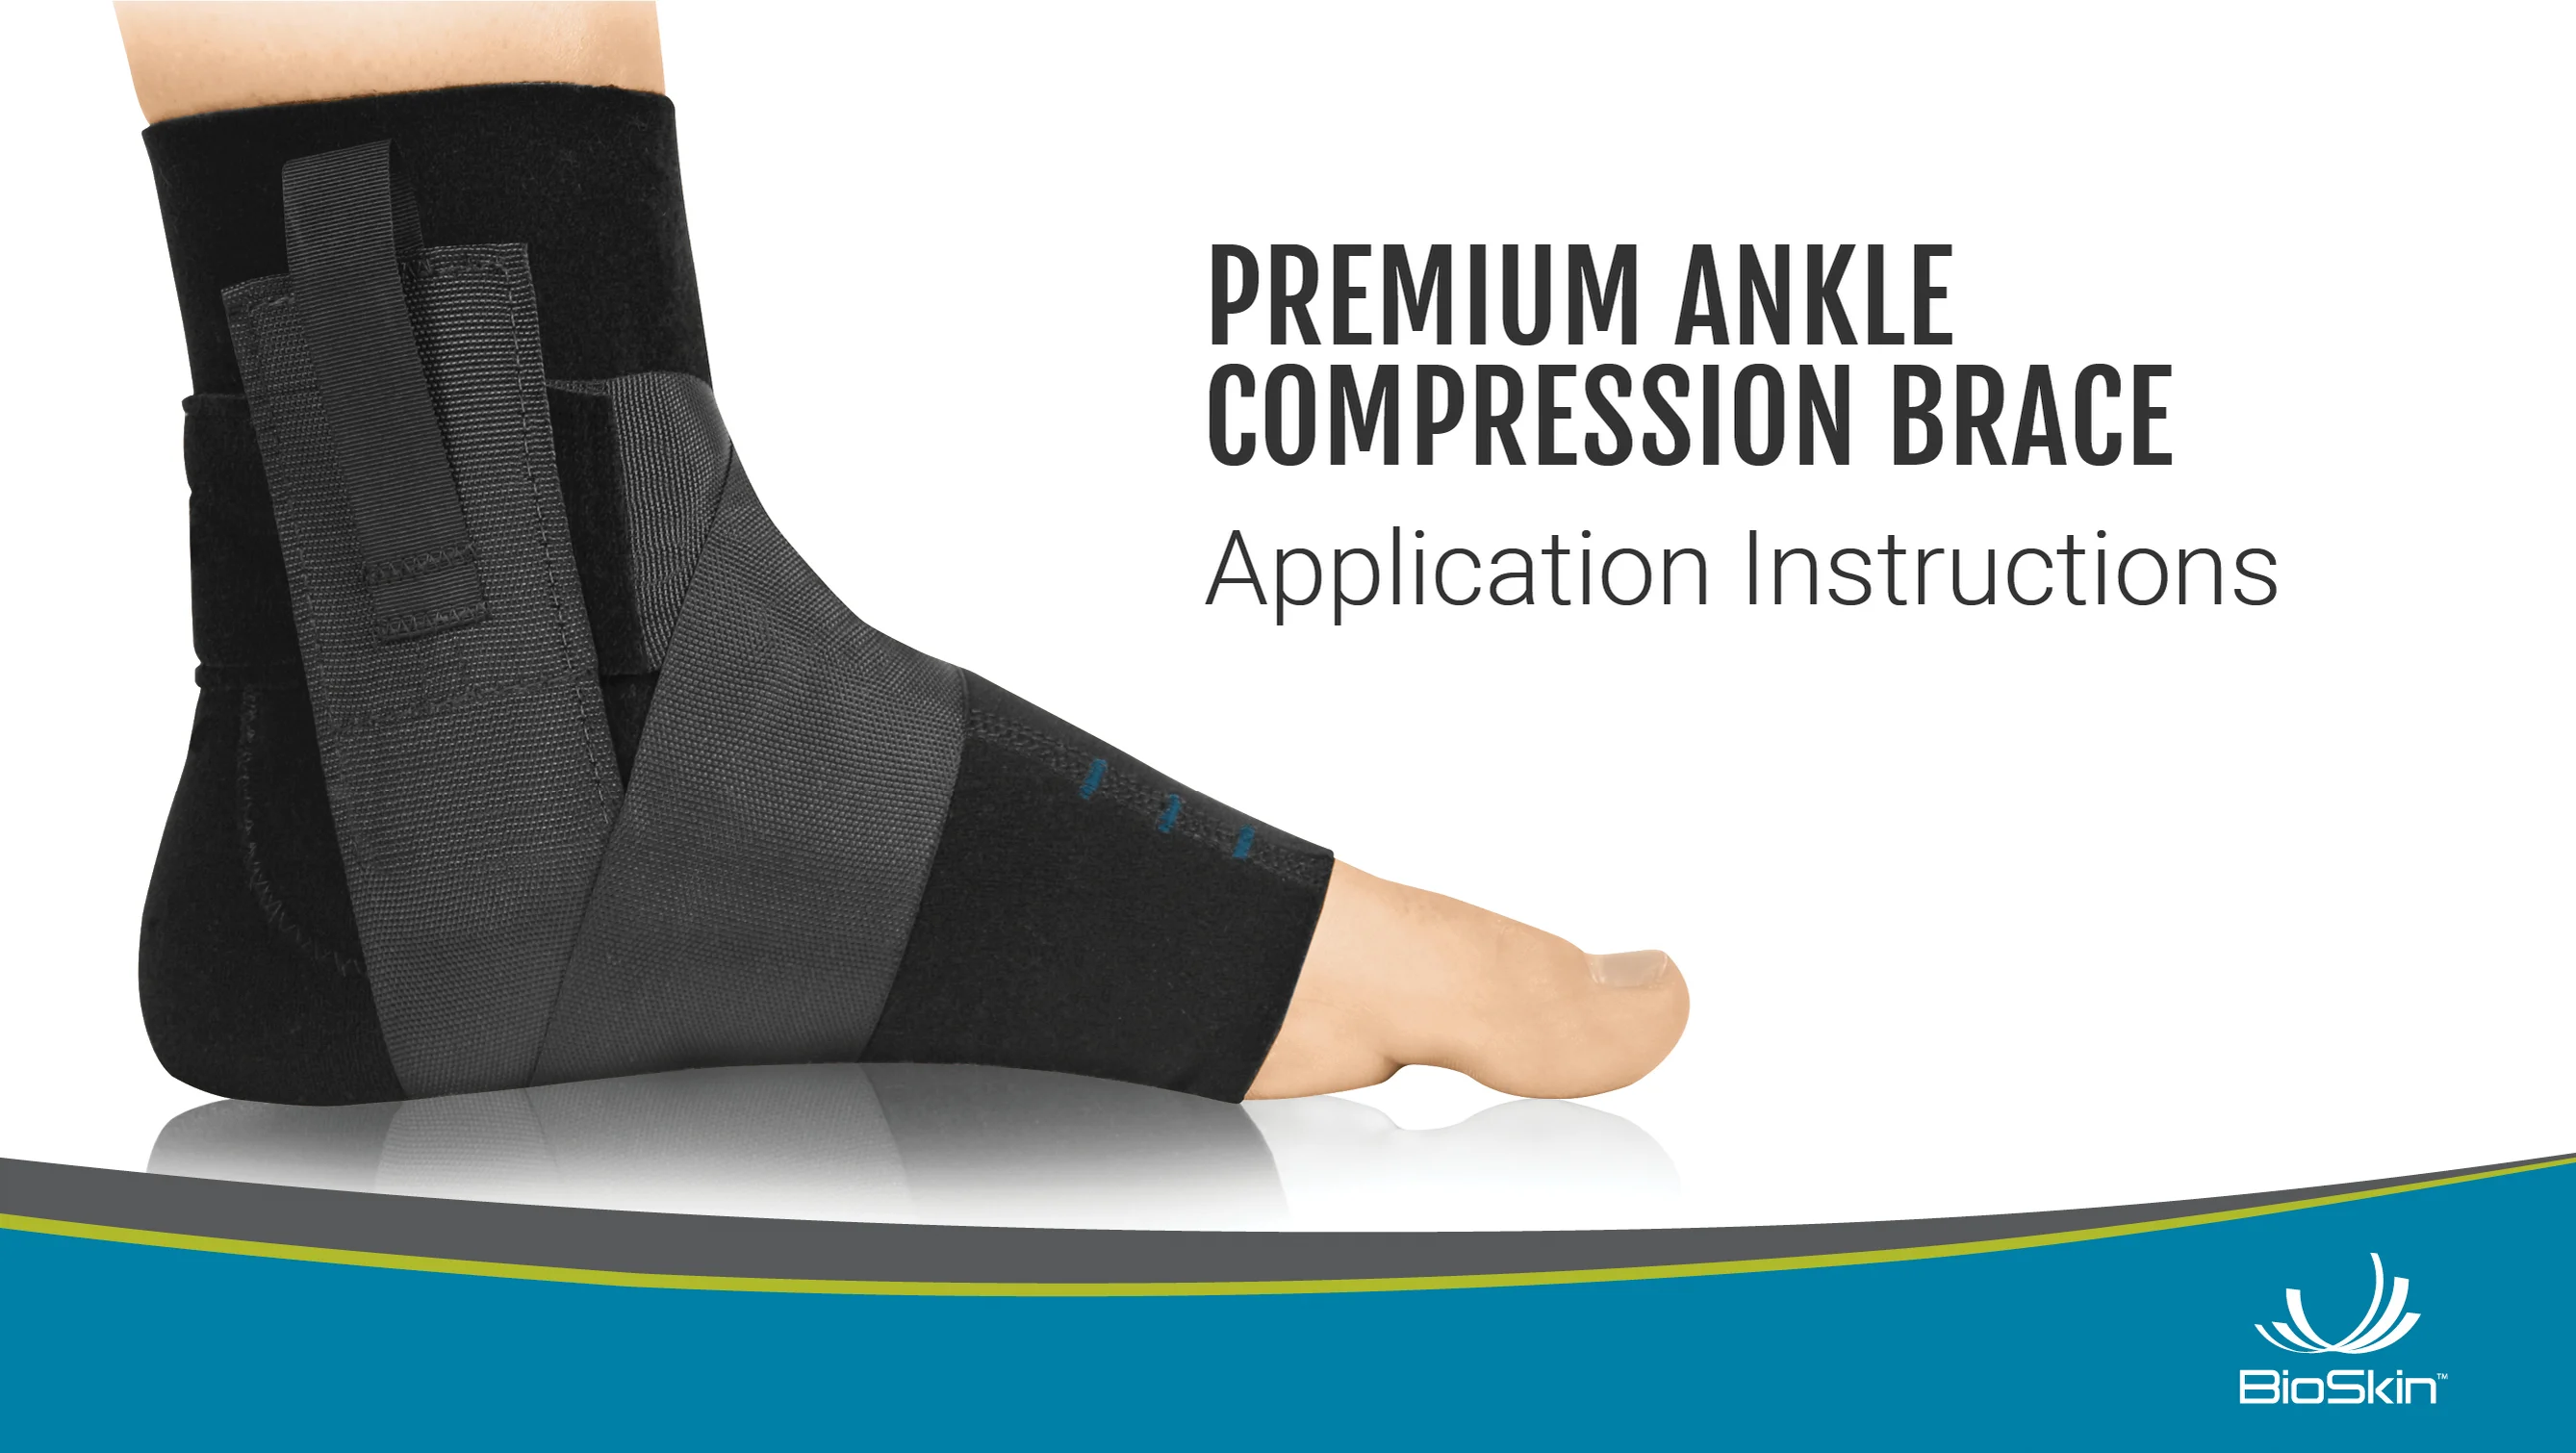 Premium Ankle Compression Brace Application Instructions on Vimeo